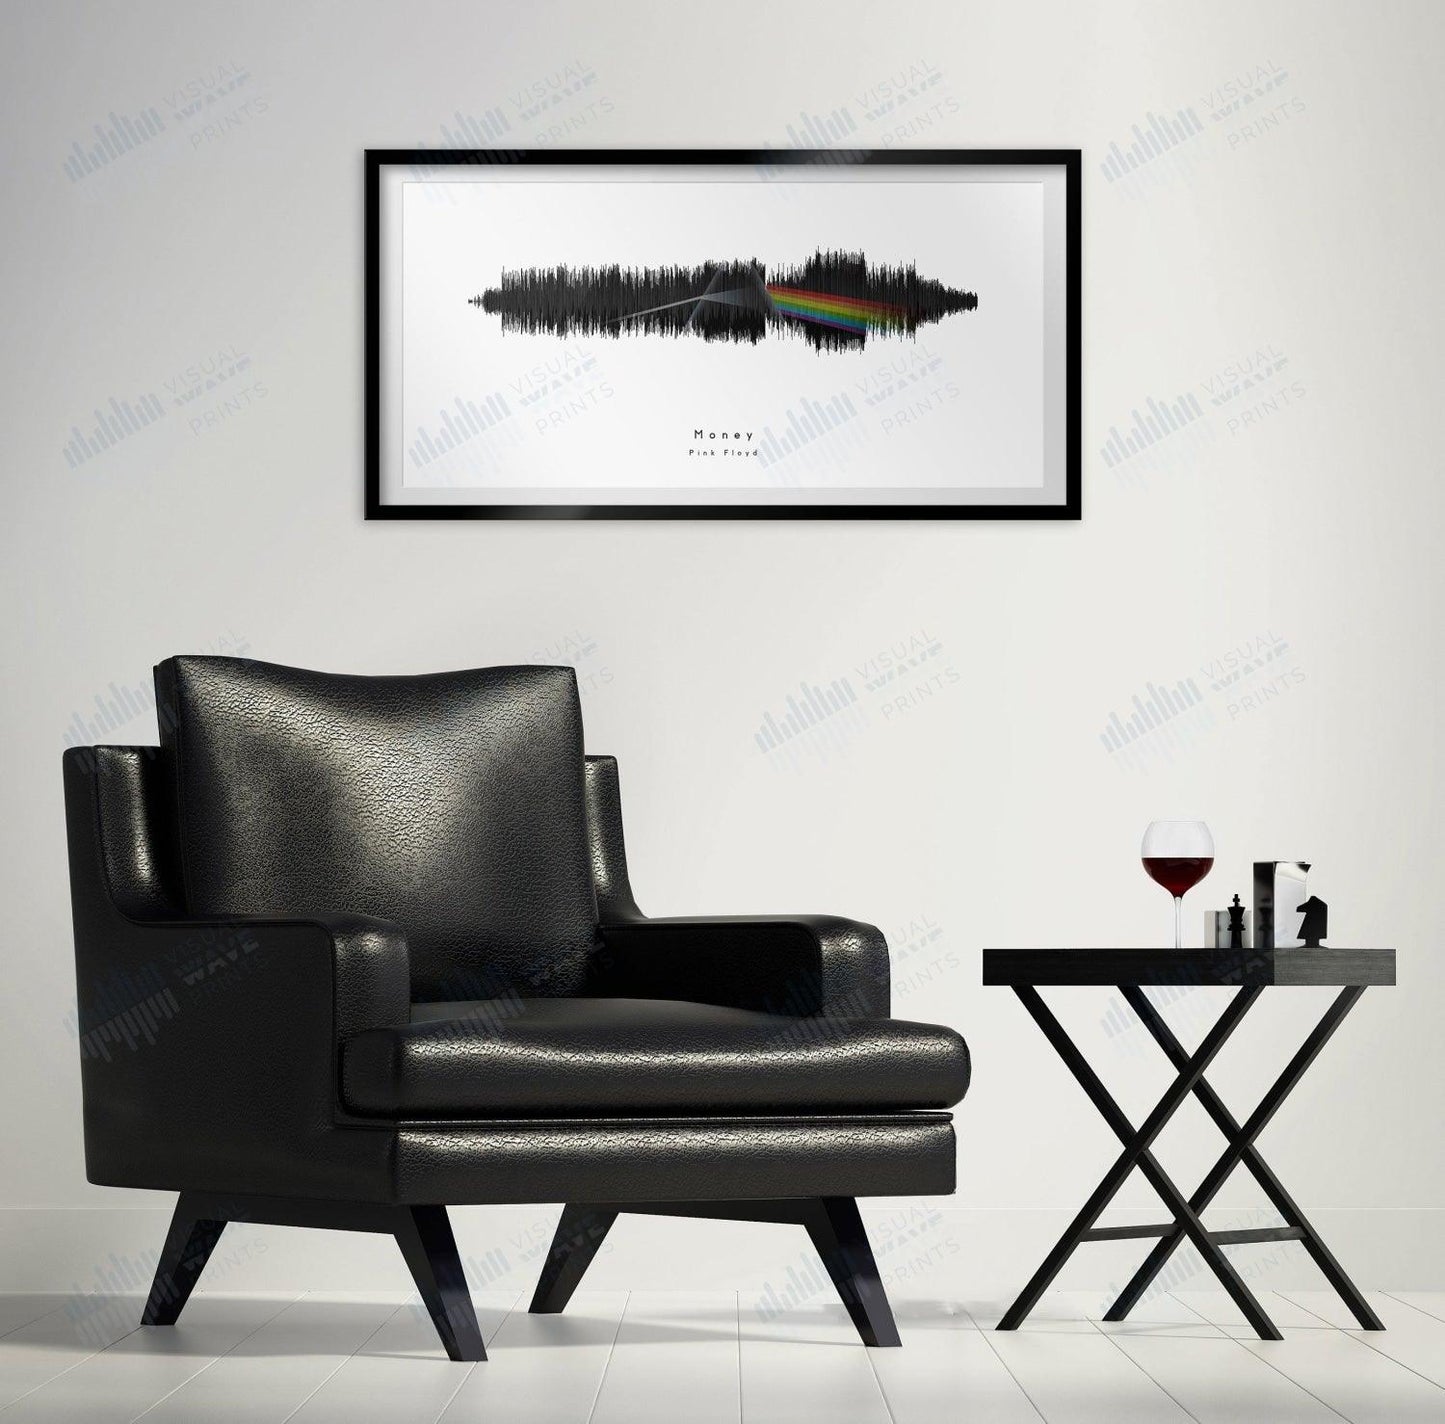 Money by Pink Floyd - Visual Wave Prints